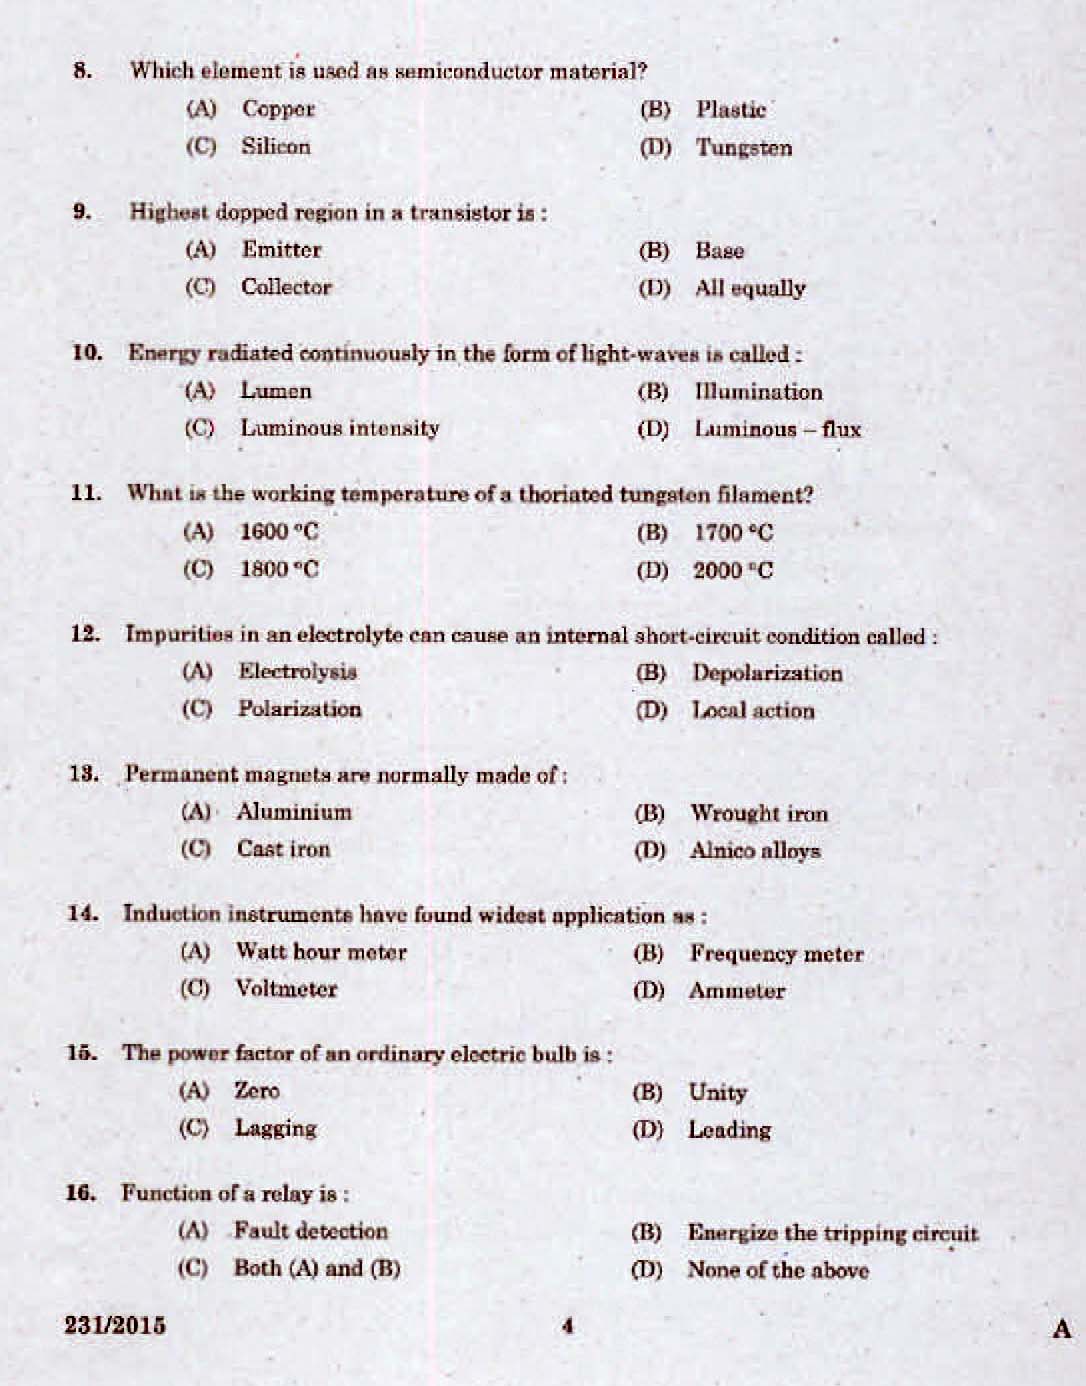 Kerala PSC Electrician Exam 2015 Question Paper Code 2312015 2